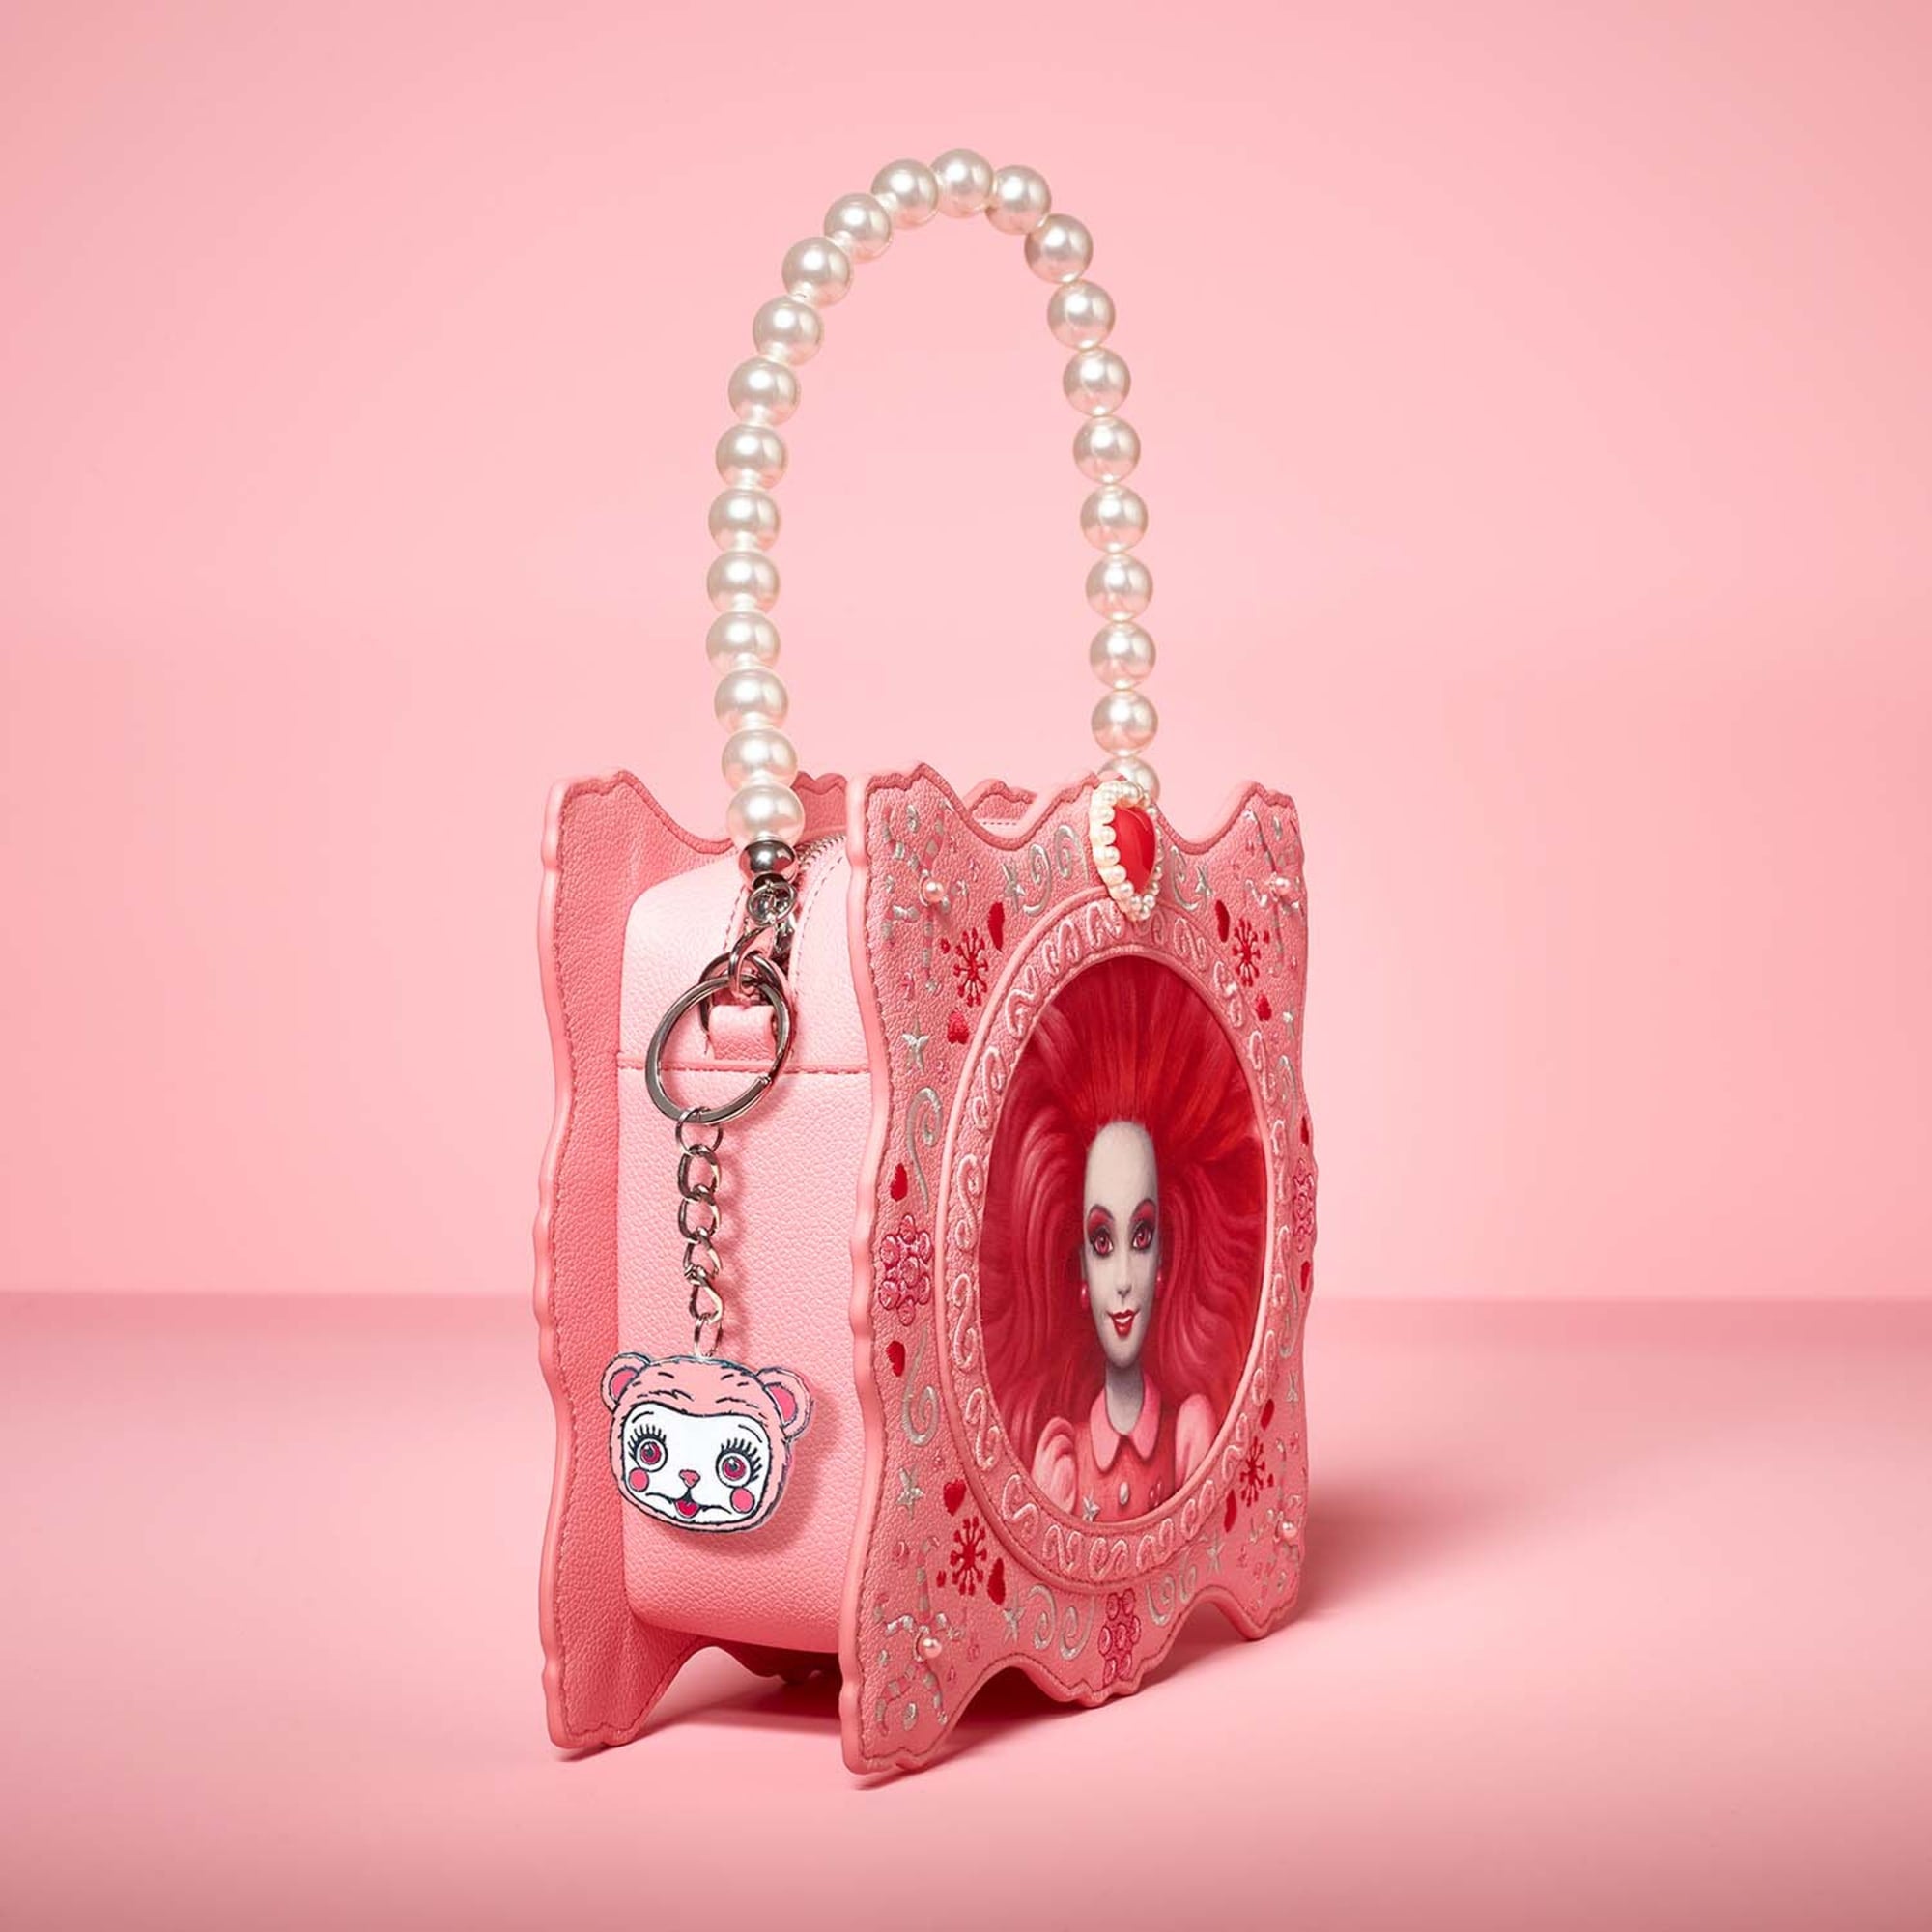 ♡ fluffy pink barbie skinnydip purse includes a... - Depop